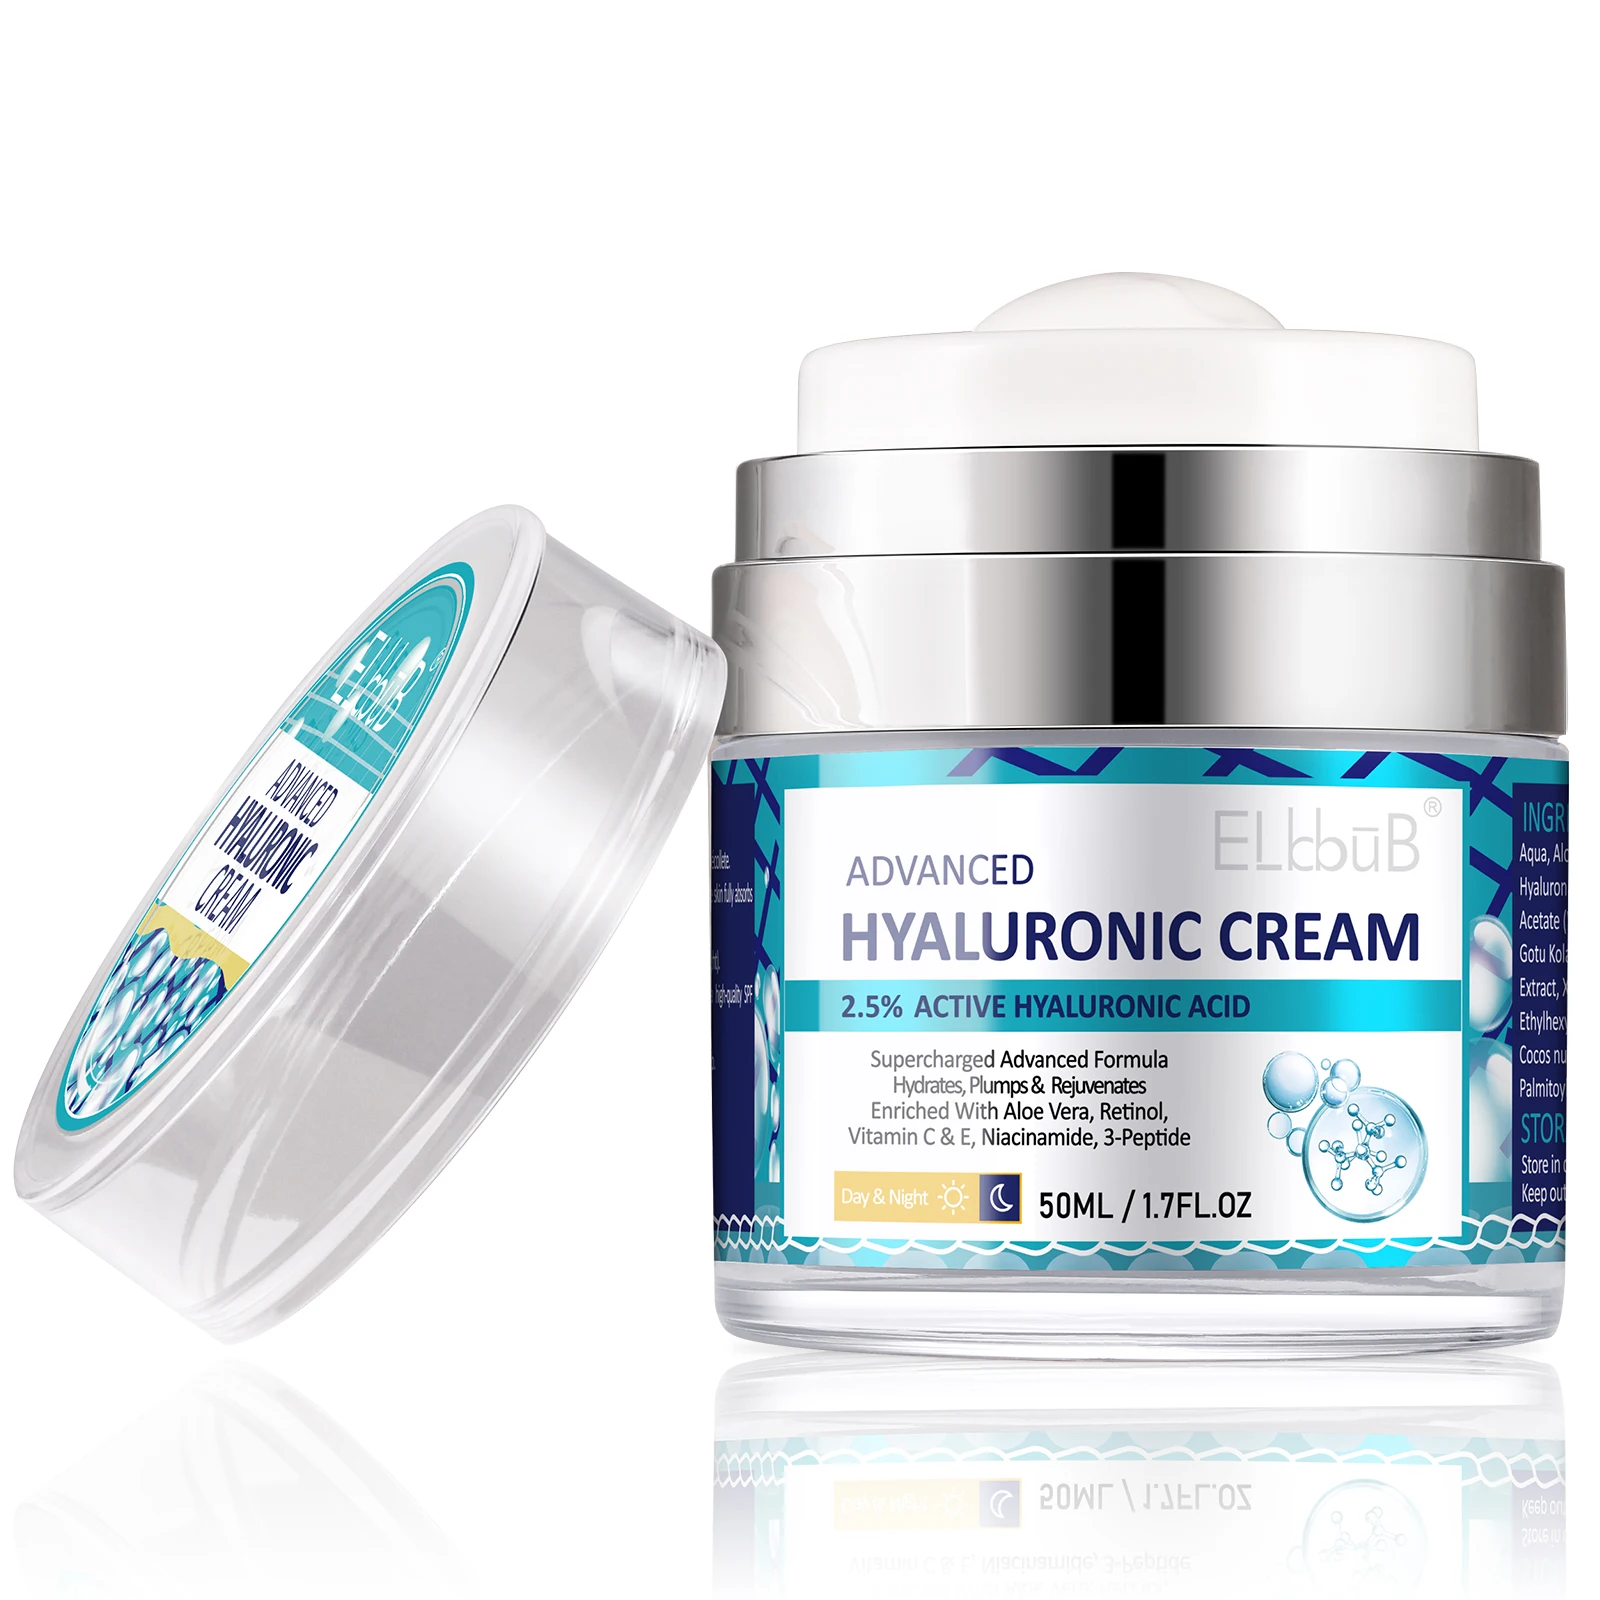 

ELbbuB Supercharged Advanced Formula Private Label Facial Cream Moisturizer Hyaluronic Acid Face Cream